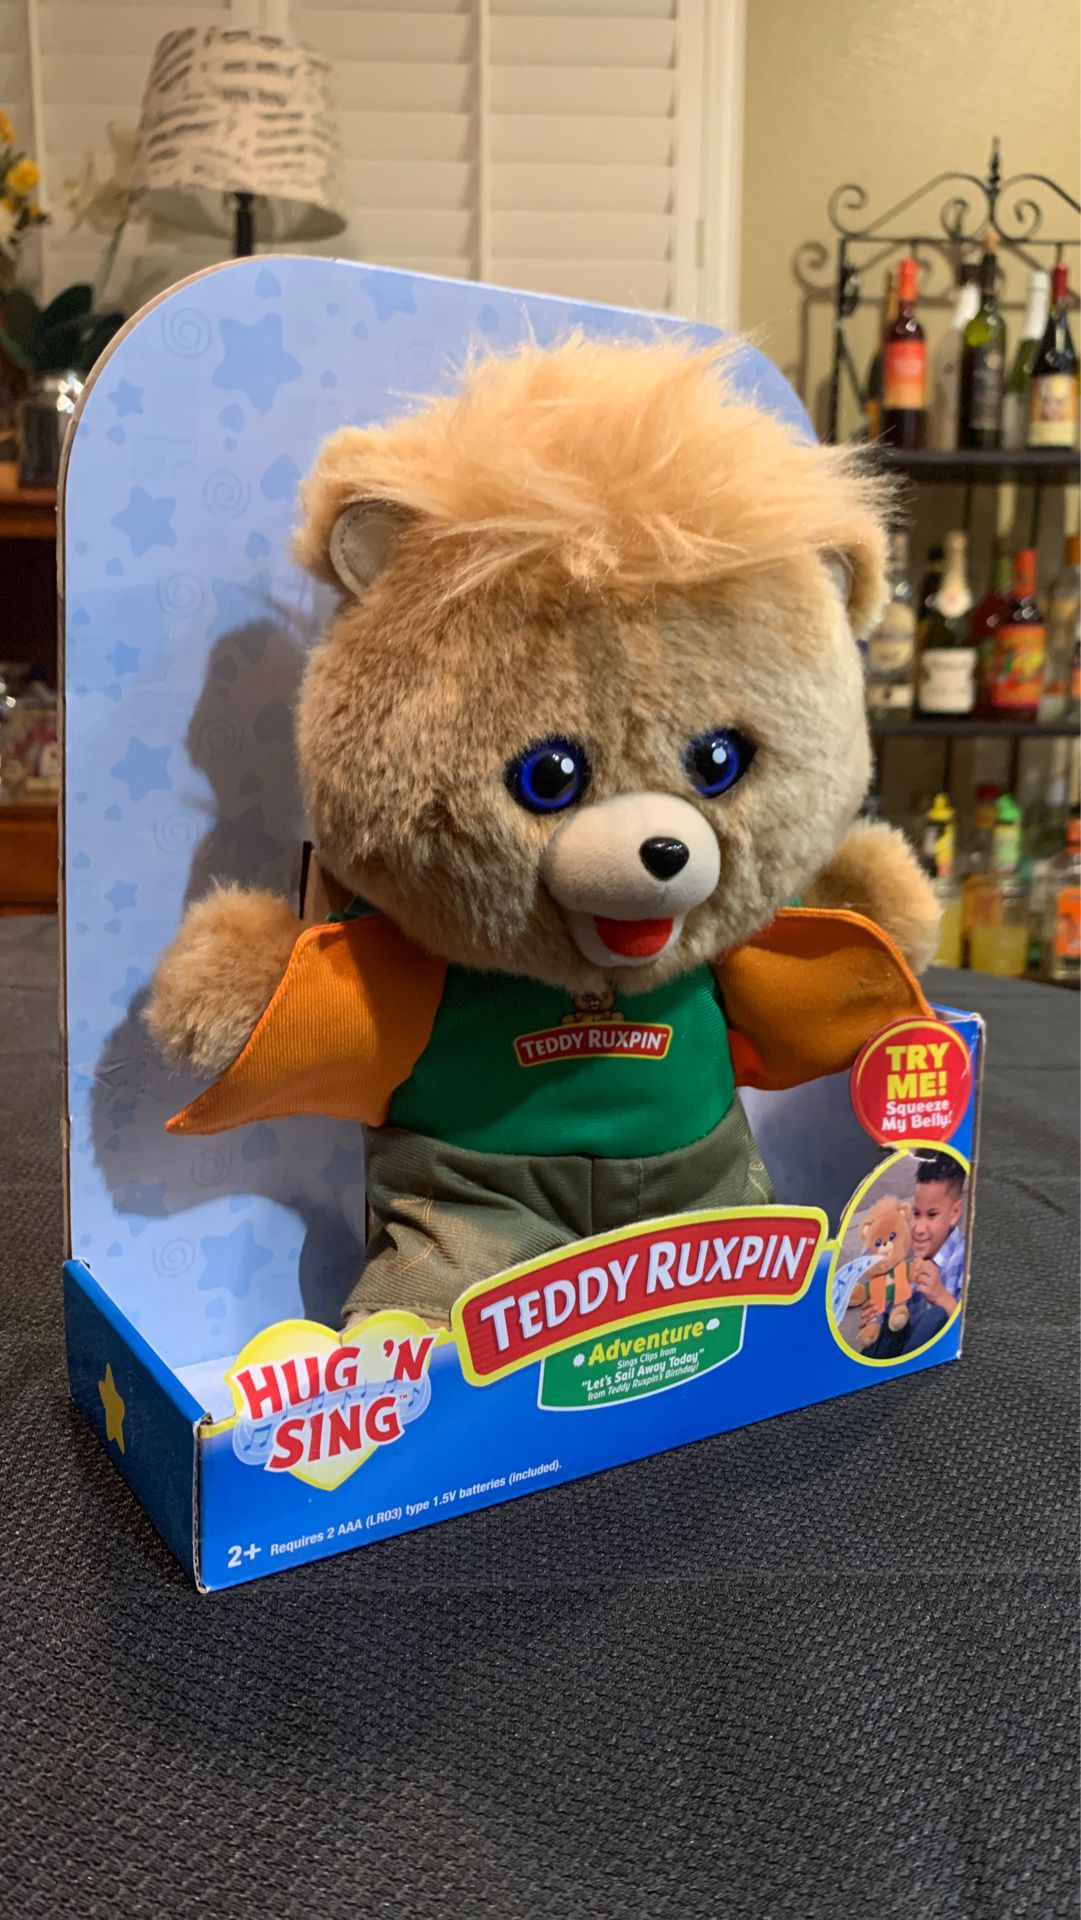 Teddy Ruxpin signing teddy bear